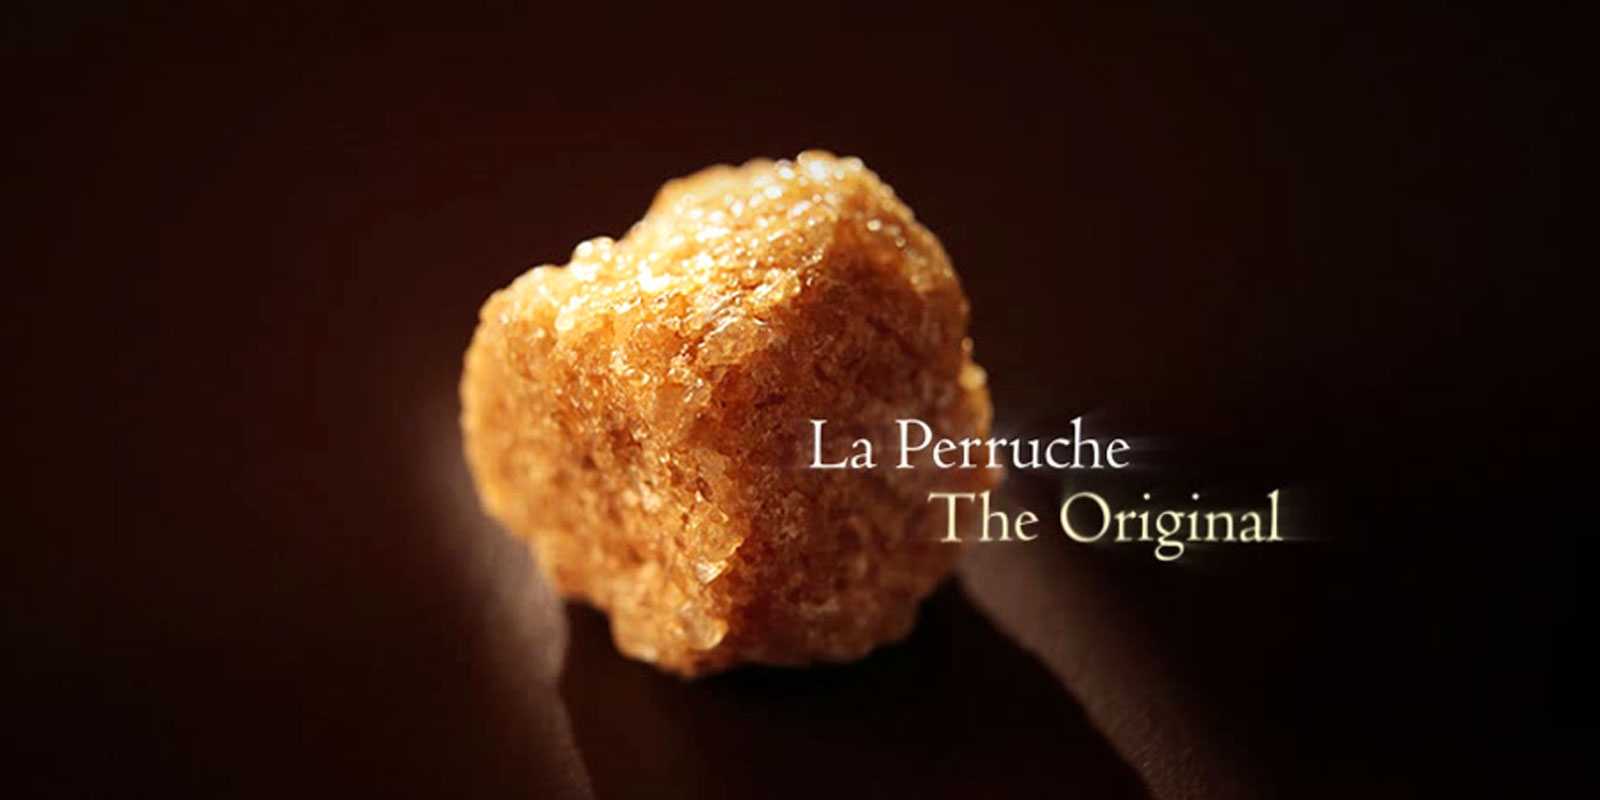 La Perruche - trtinovy cukr La Perruche je vyjimecny produkt se zvlastni chuti, ktera potesi vsechny, kteri oceni jemnou a sofistikovanou chut. Jednoduse receno, vykouzli ve vasich smyslech ciste poteseni. La Perruche se dodava v nepravidelnych kostkach cukru v bile nebo zlatohnede barve. Krystalova forma v sejkru znama take jako kasonada.